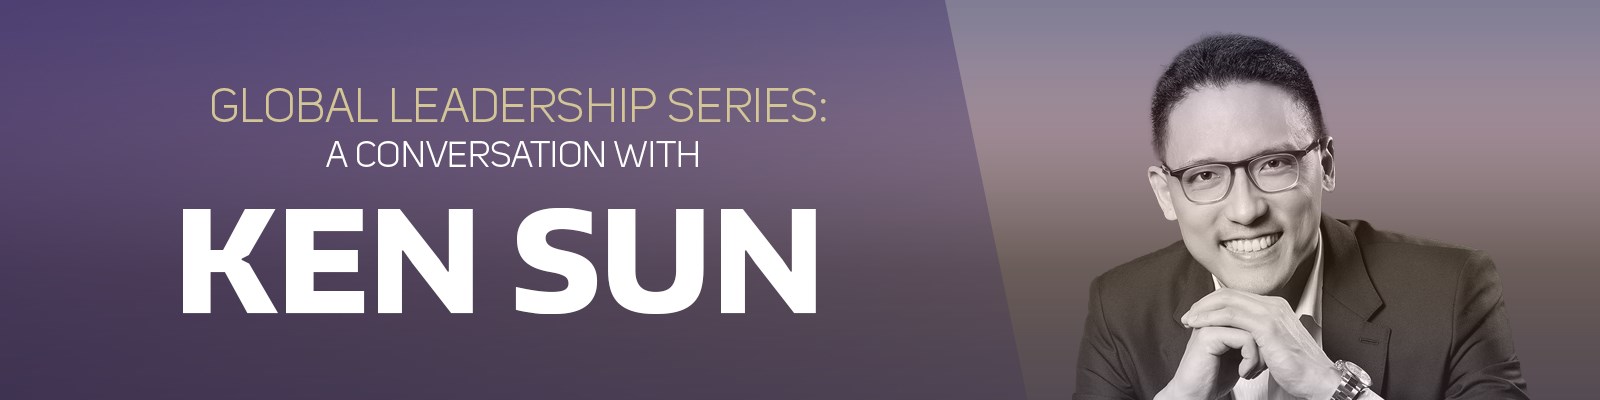 Global Leadership Series--A Conversation with Ken Sun